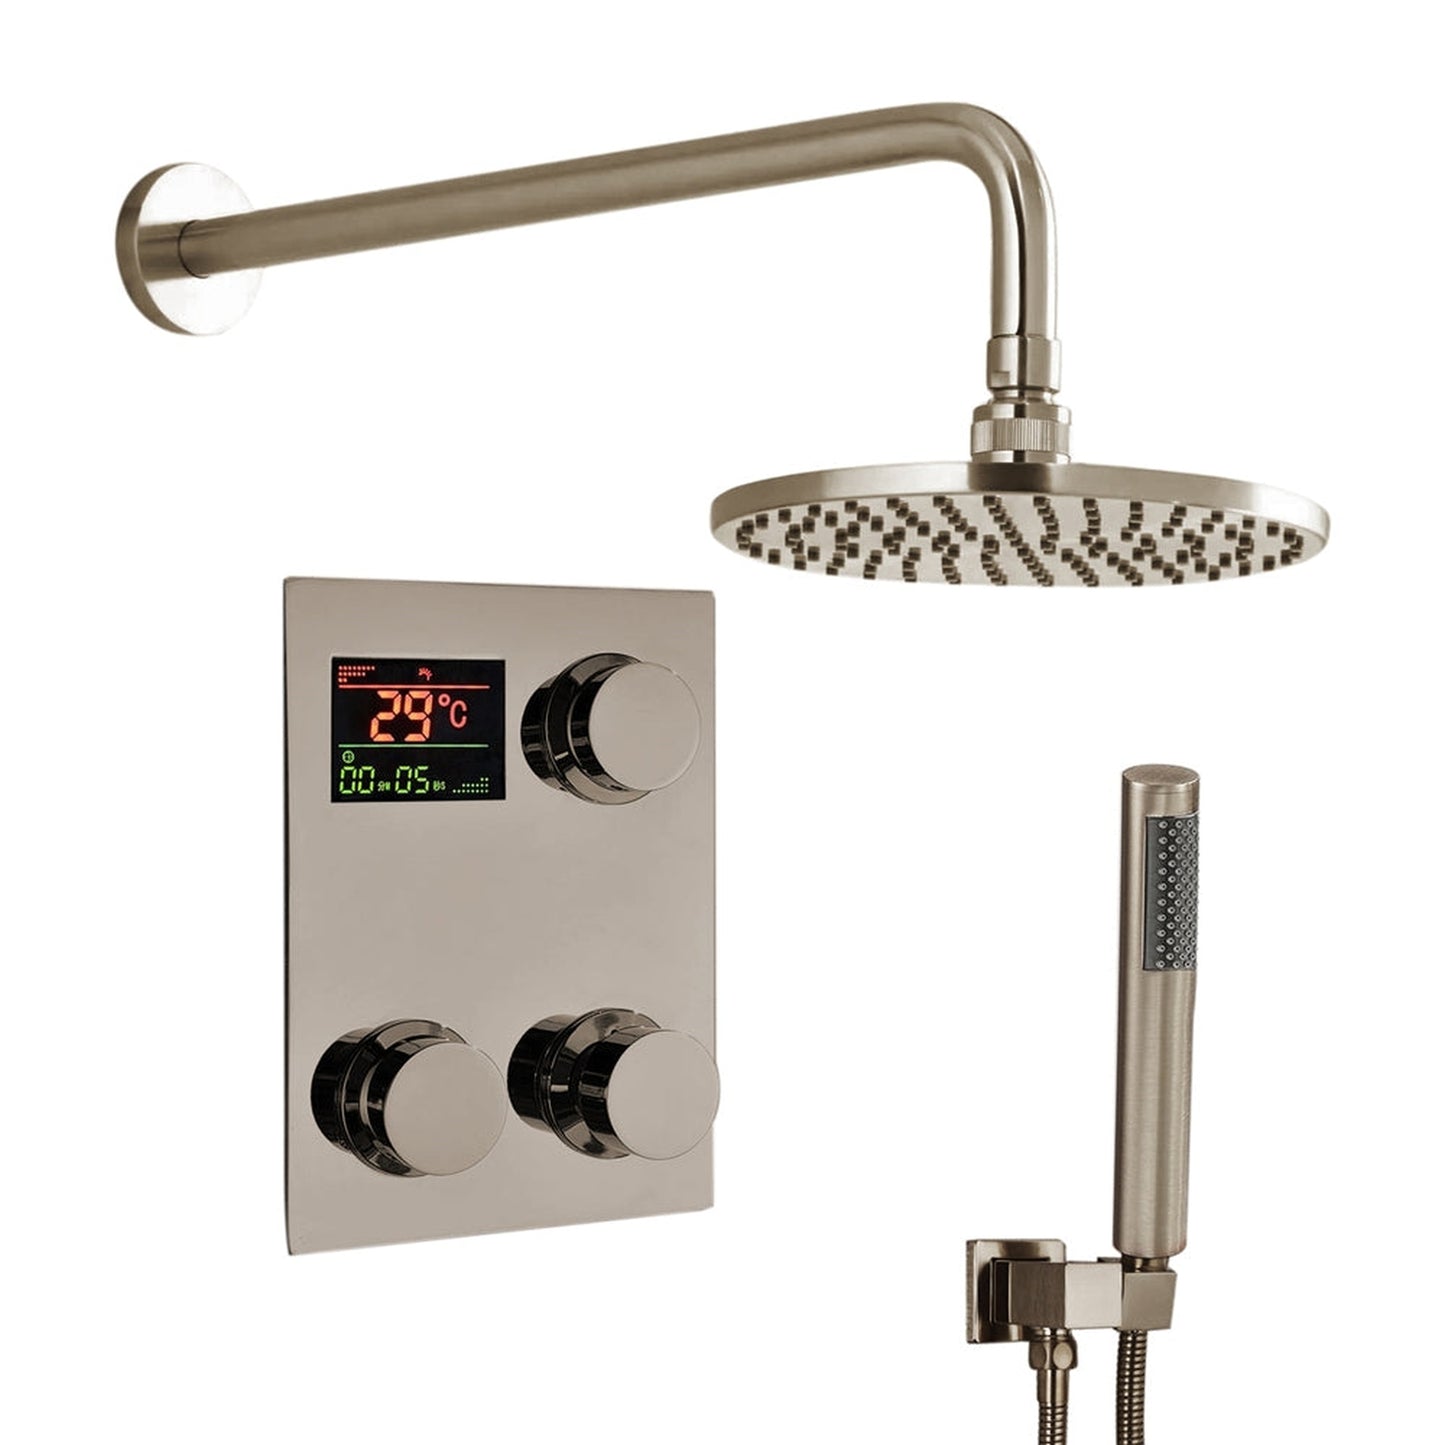 Fontana 10" Brushed Nickel Wall-Mounted Rainfall Digital Mixer Shower Set With Hand Shower